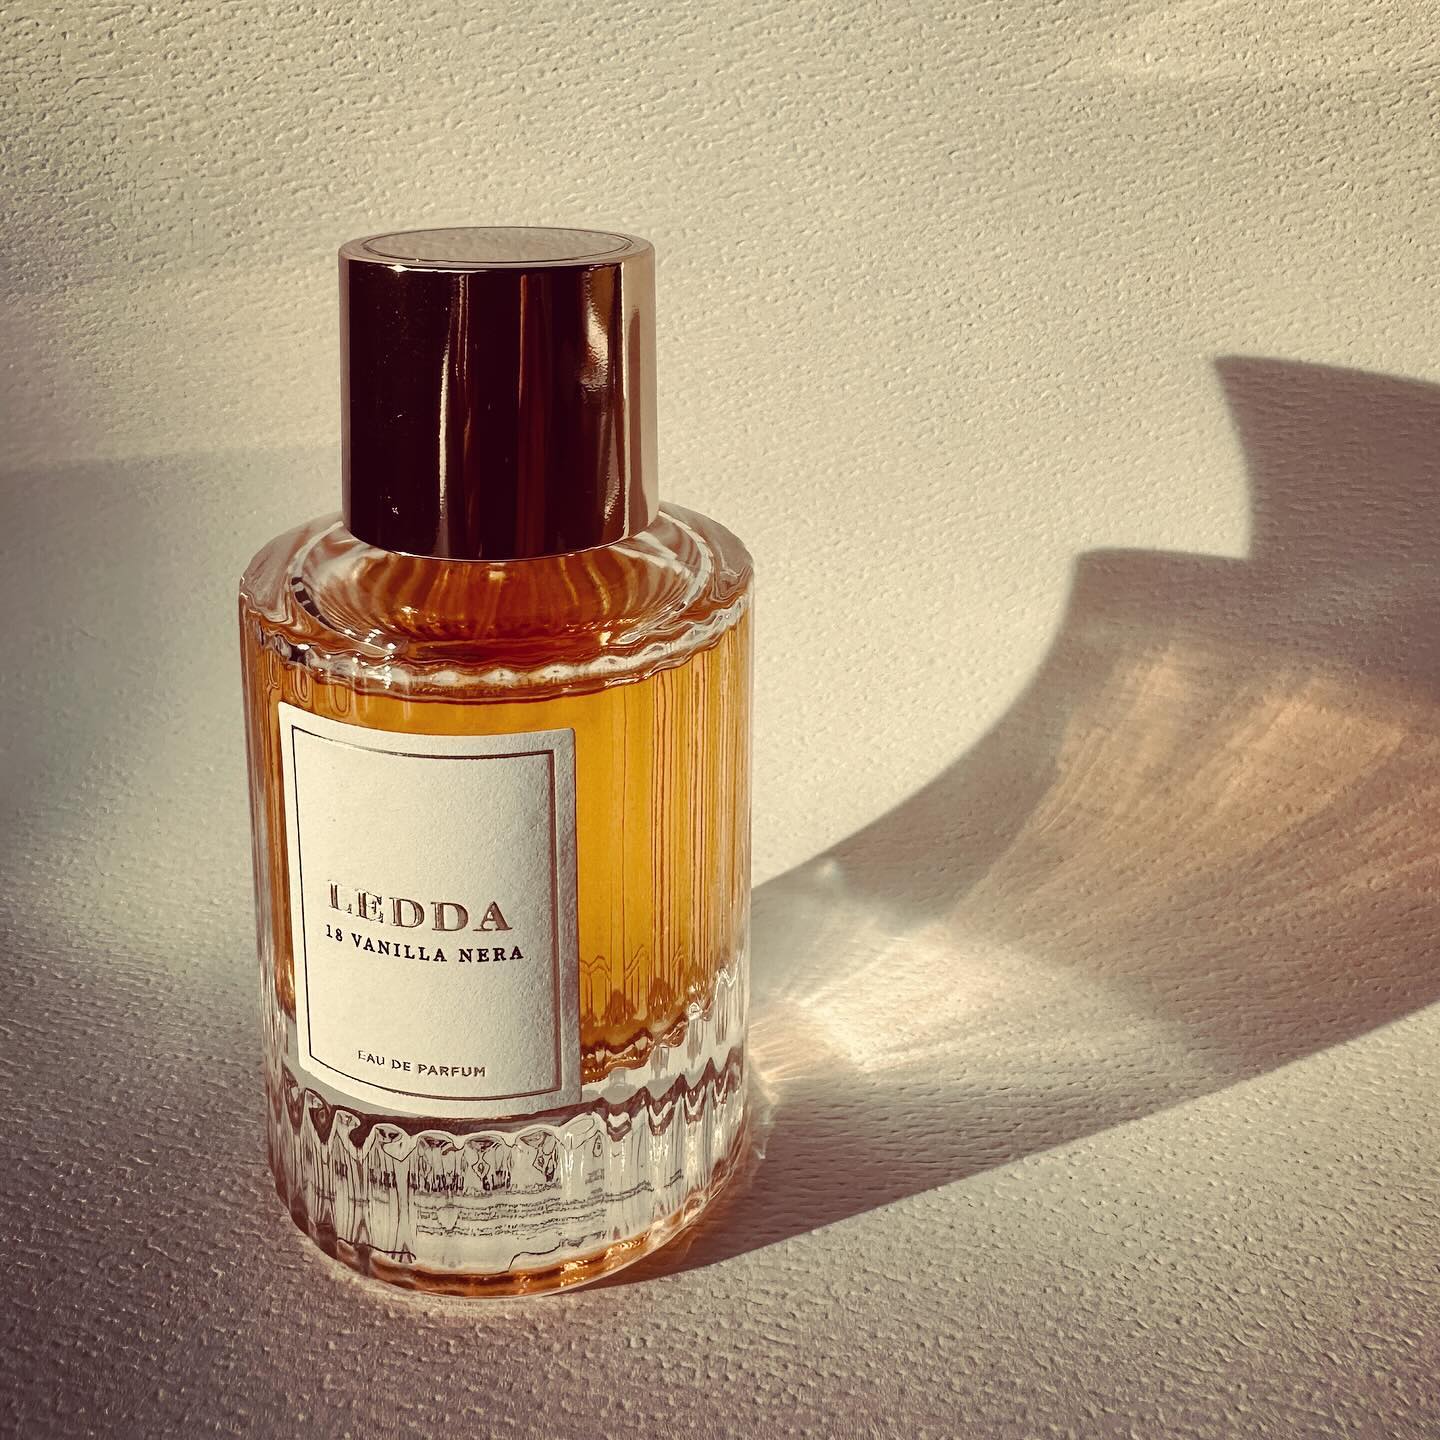 Ledda 19 Vanilla Nera Perfume Review